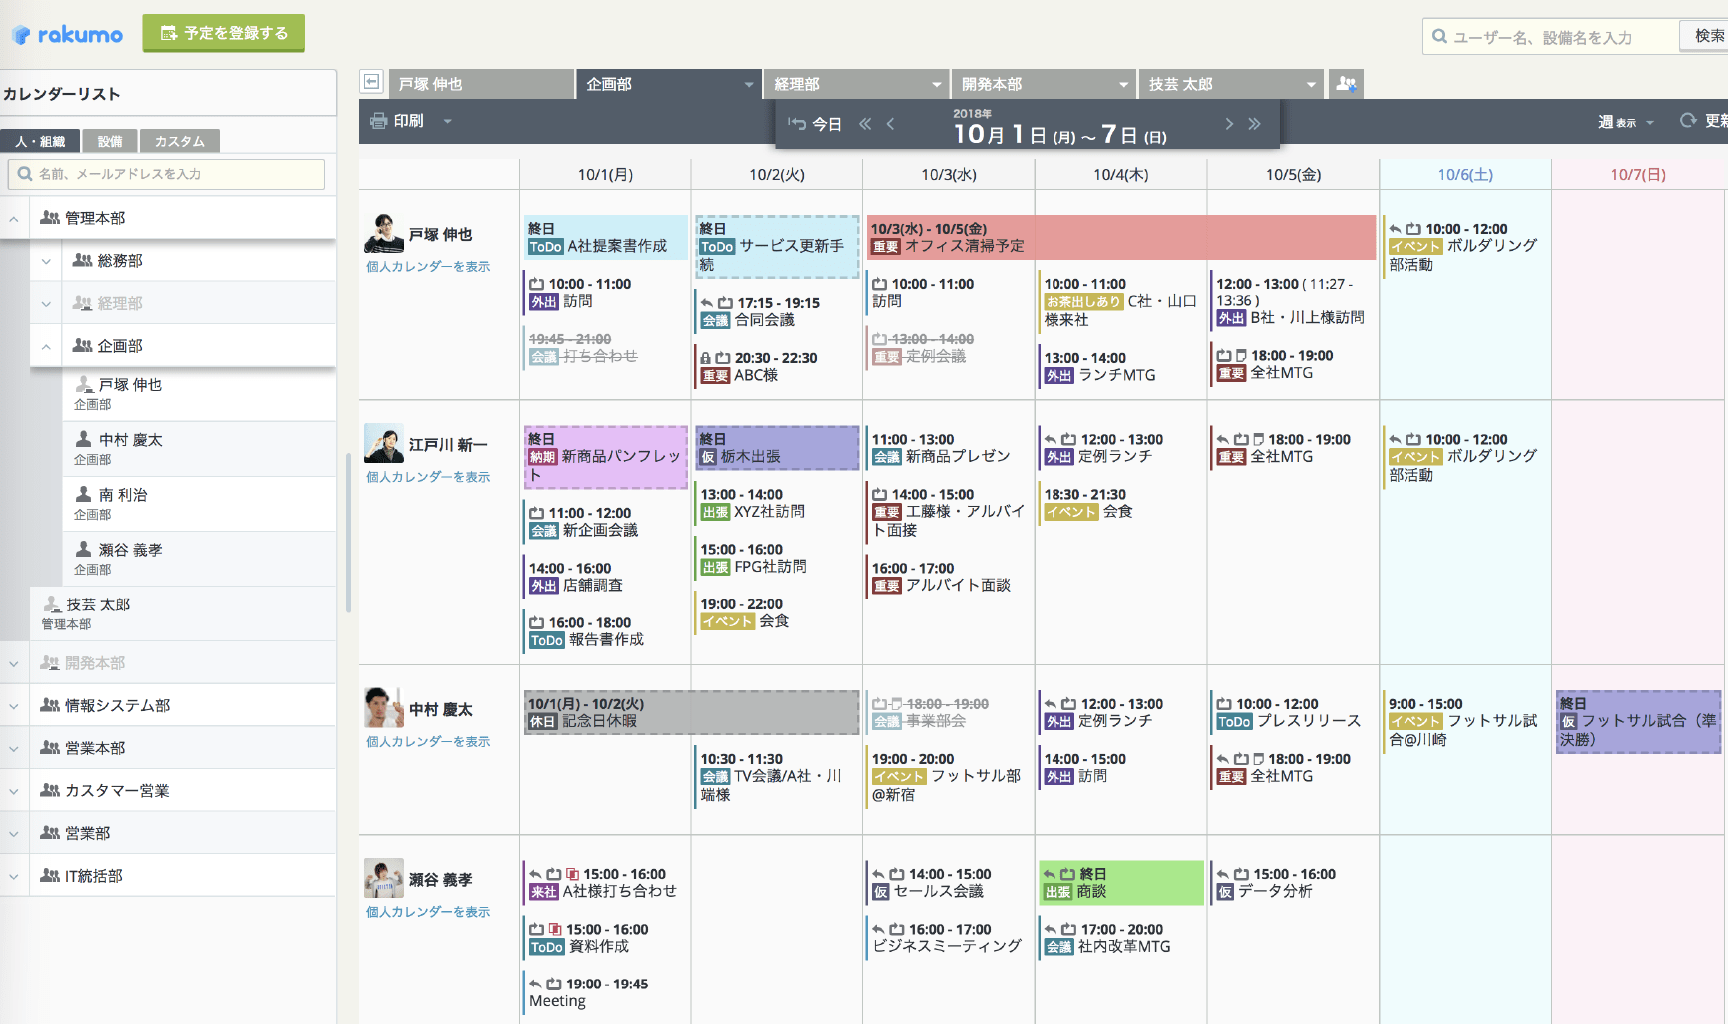 Google カレンダー共有・拡張スケジューラー「rakumo カレンダー」画面